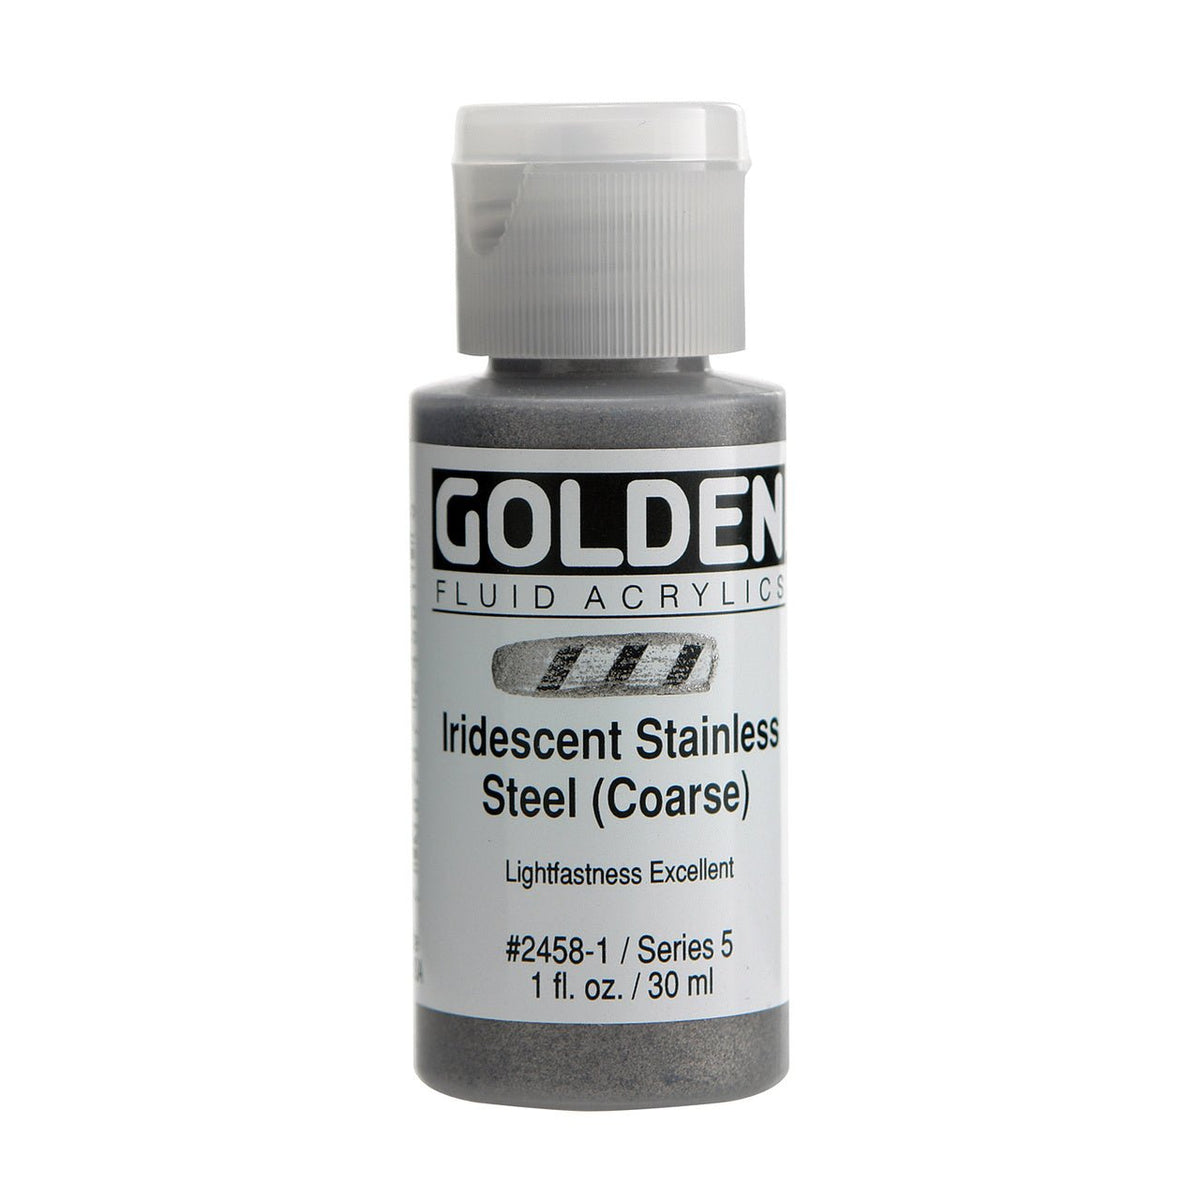 Golden Fluid Acrylic Iridescent Stainless Steel 1 oz - merriartist.com